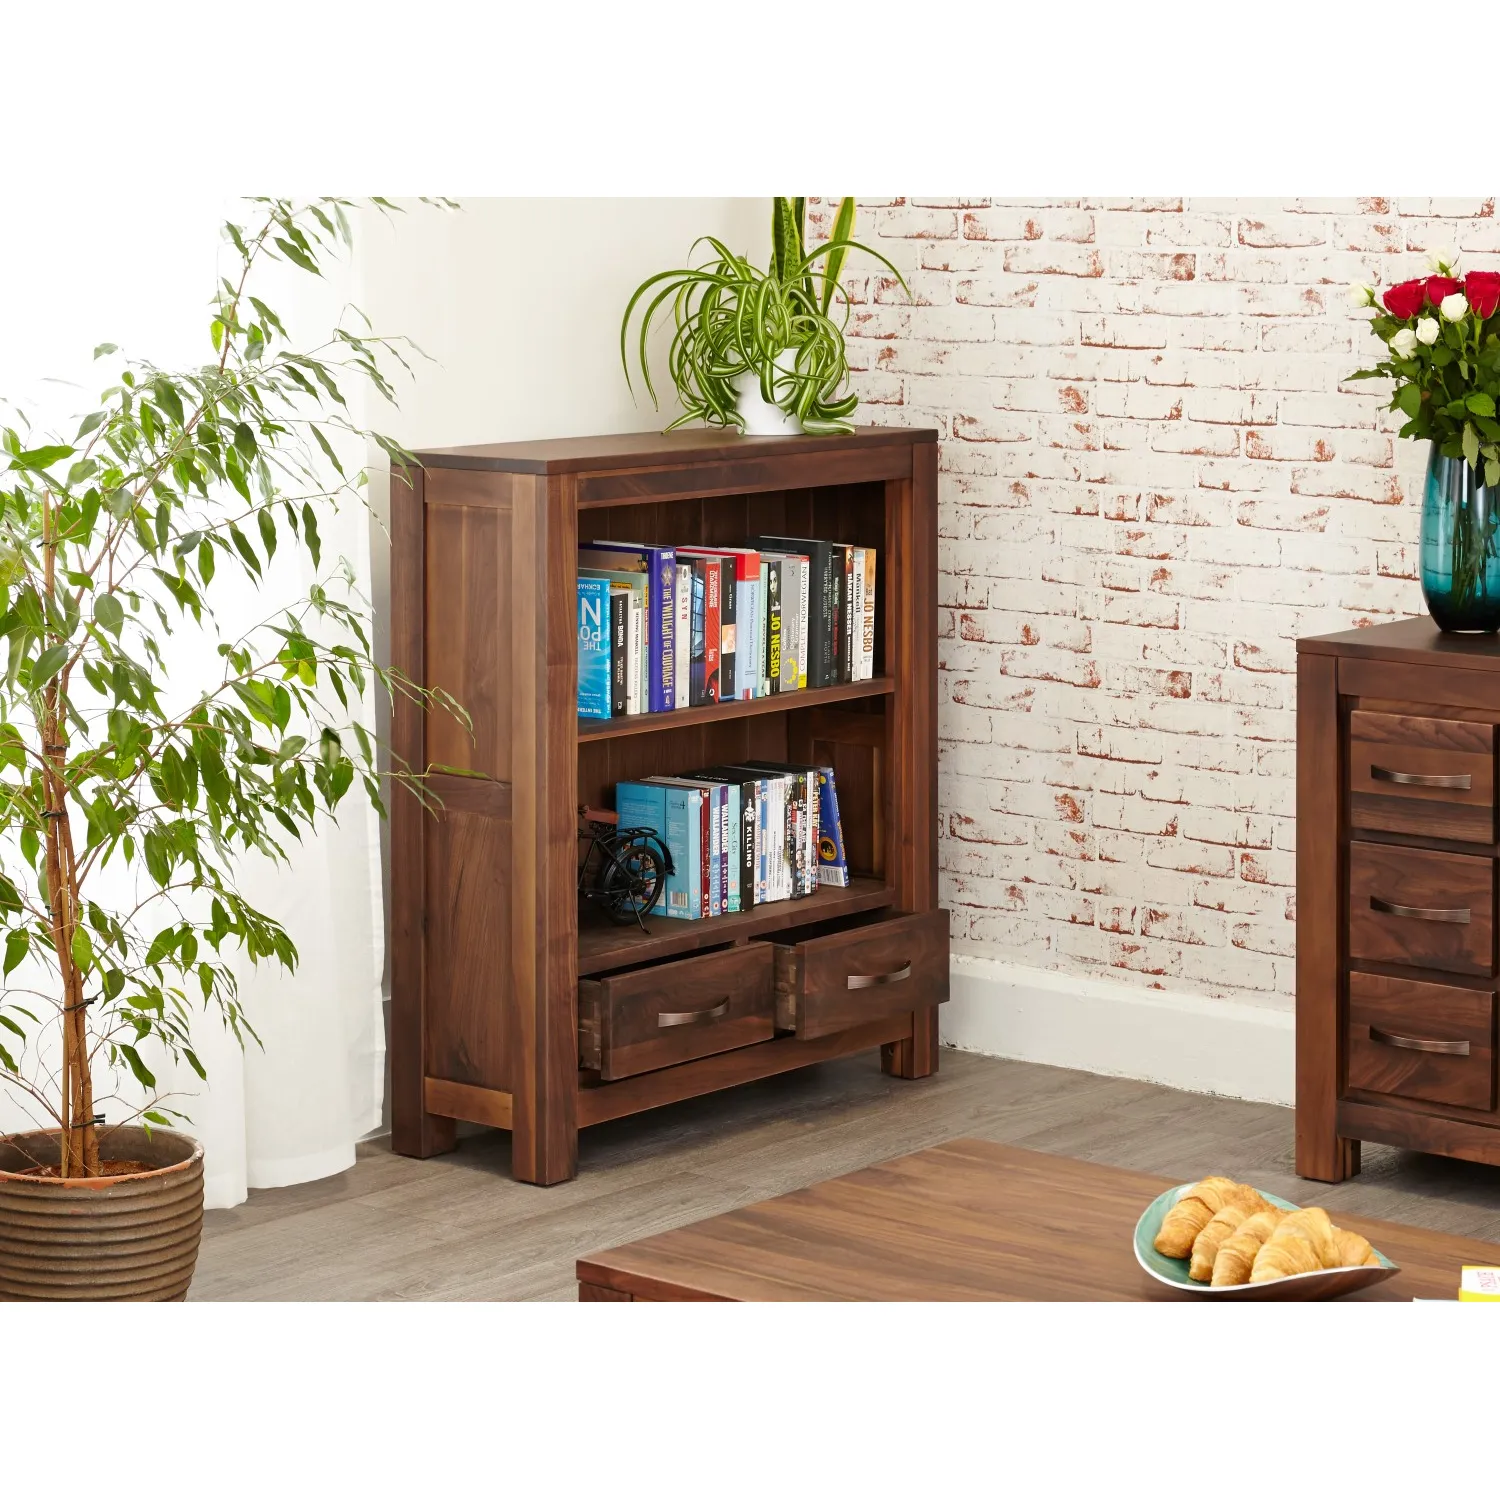 Walnut Small Low Bookcase With 2 Drawers 1 Shelf Dark Wood Finish